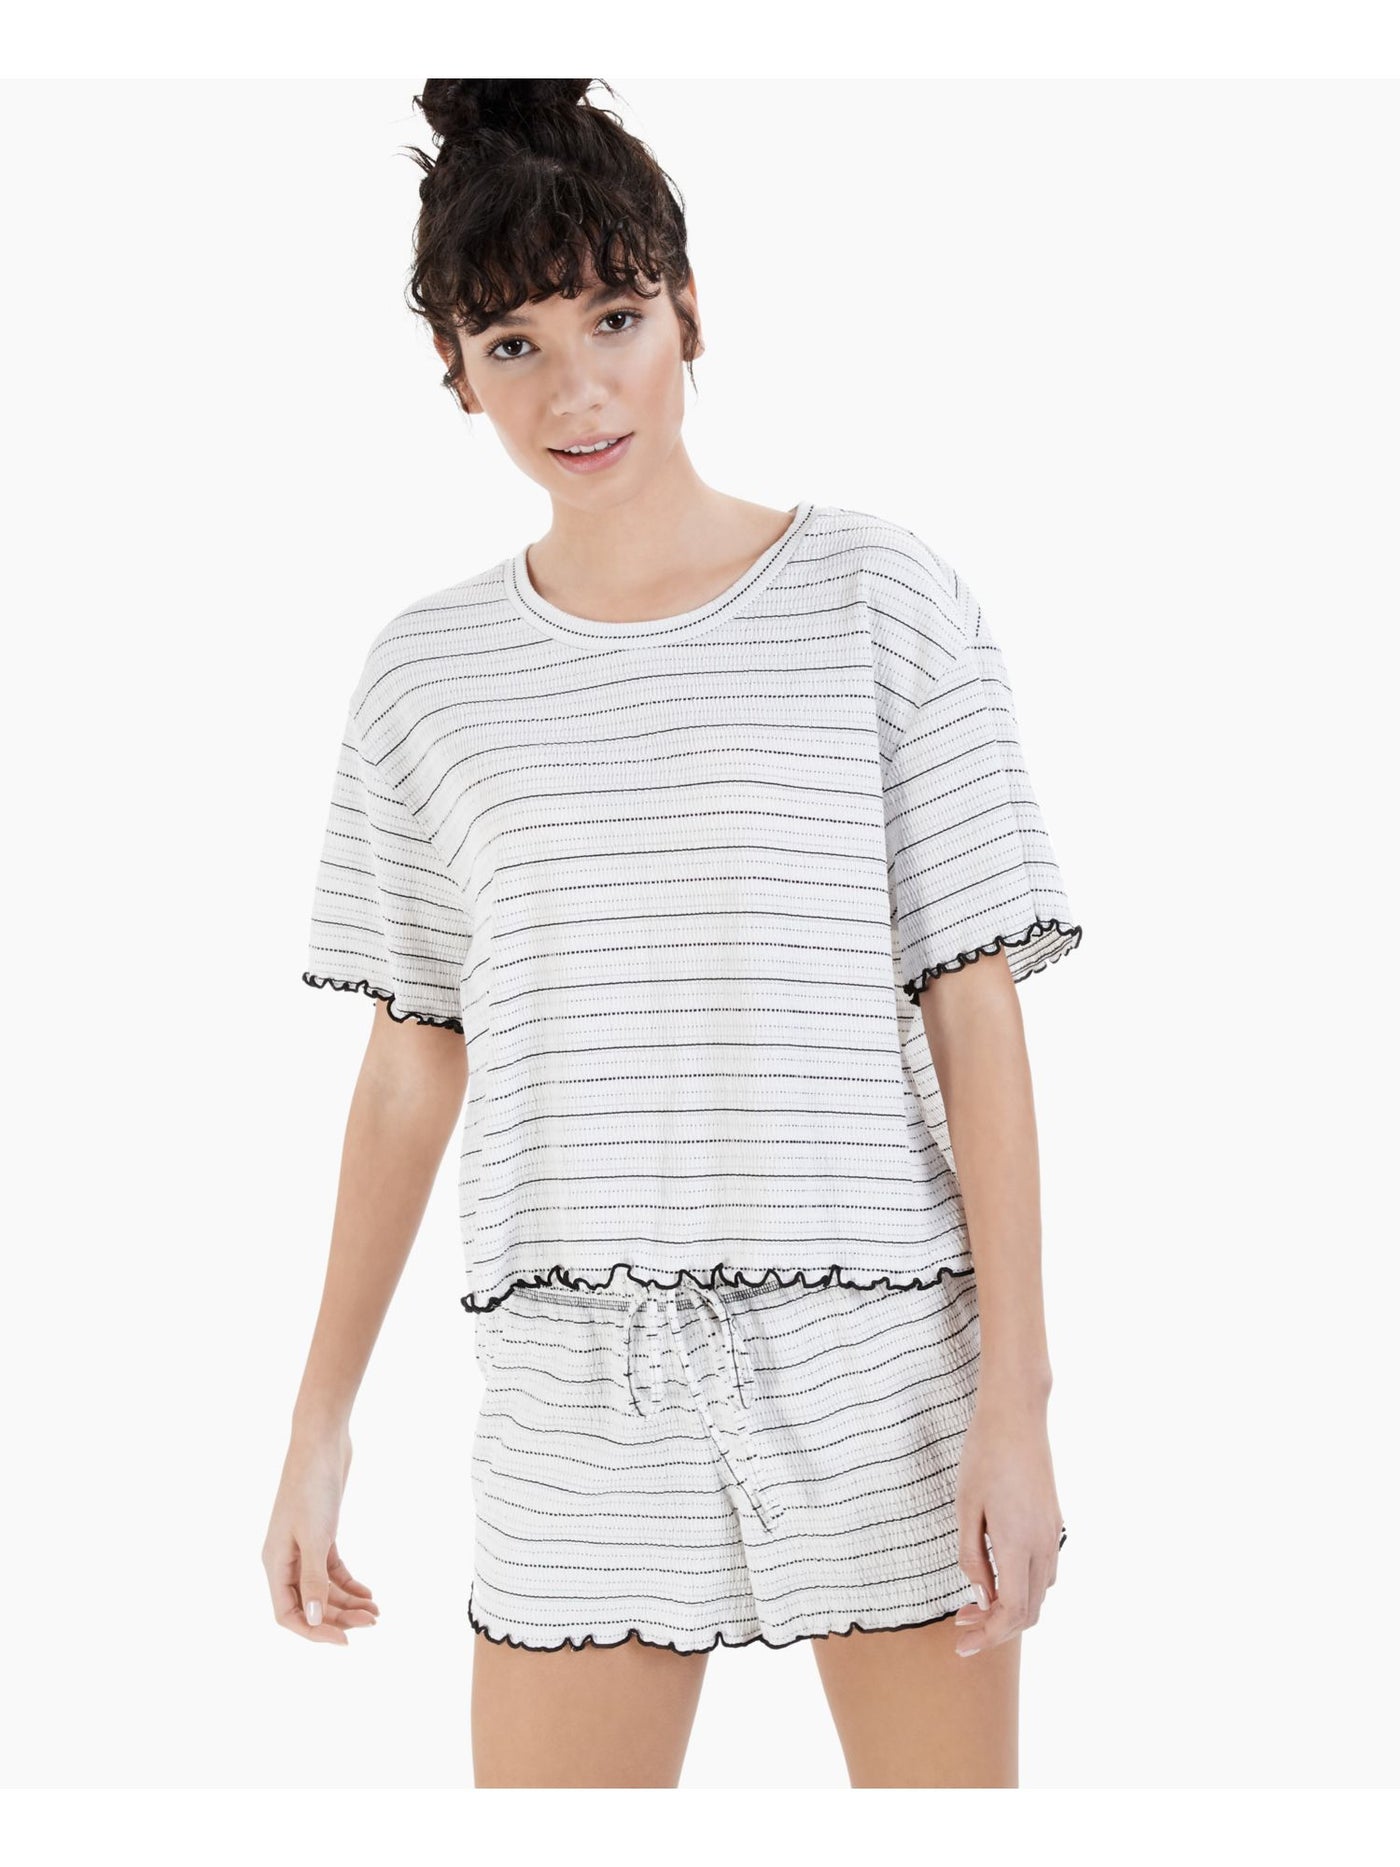 JENNI Womens White Striped Textured Short Sleeve T-Shirt Top and Shorts Pajamas XS